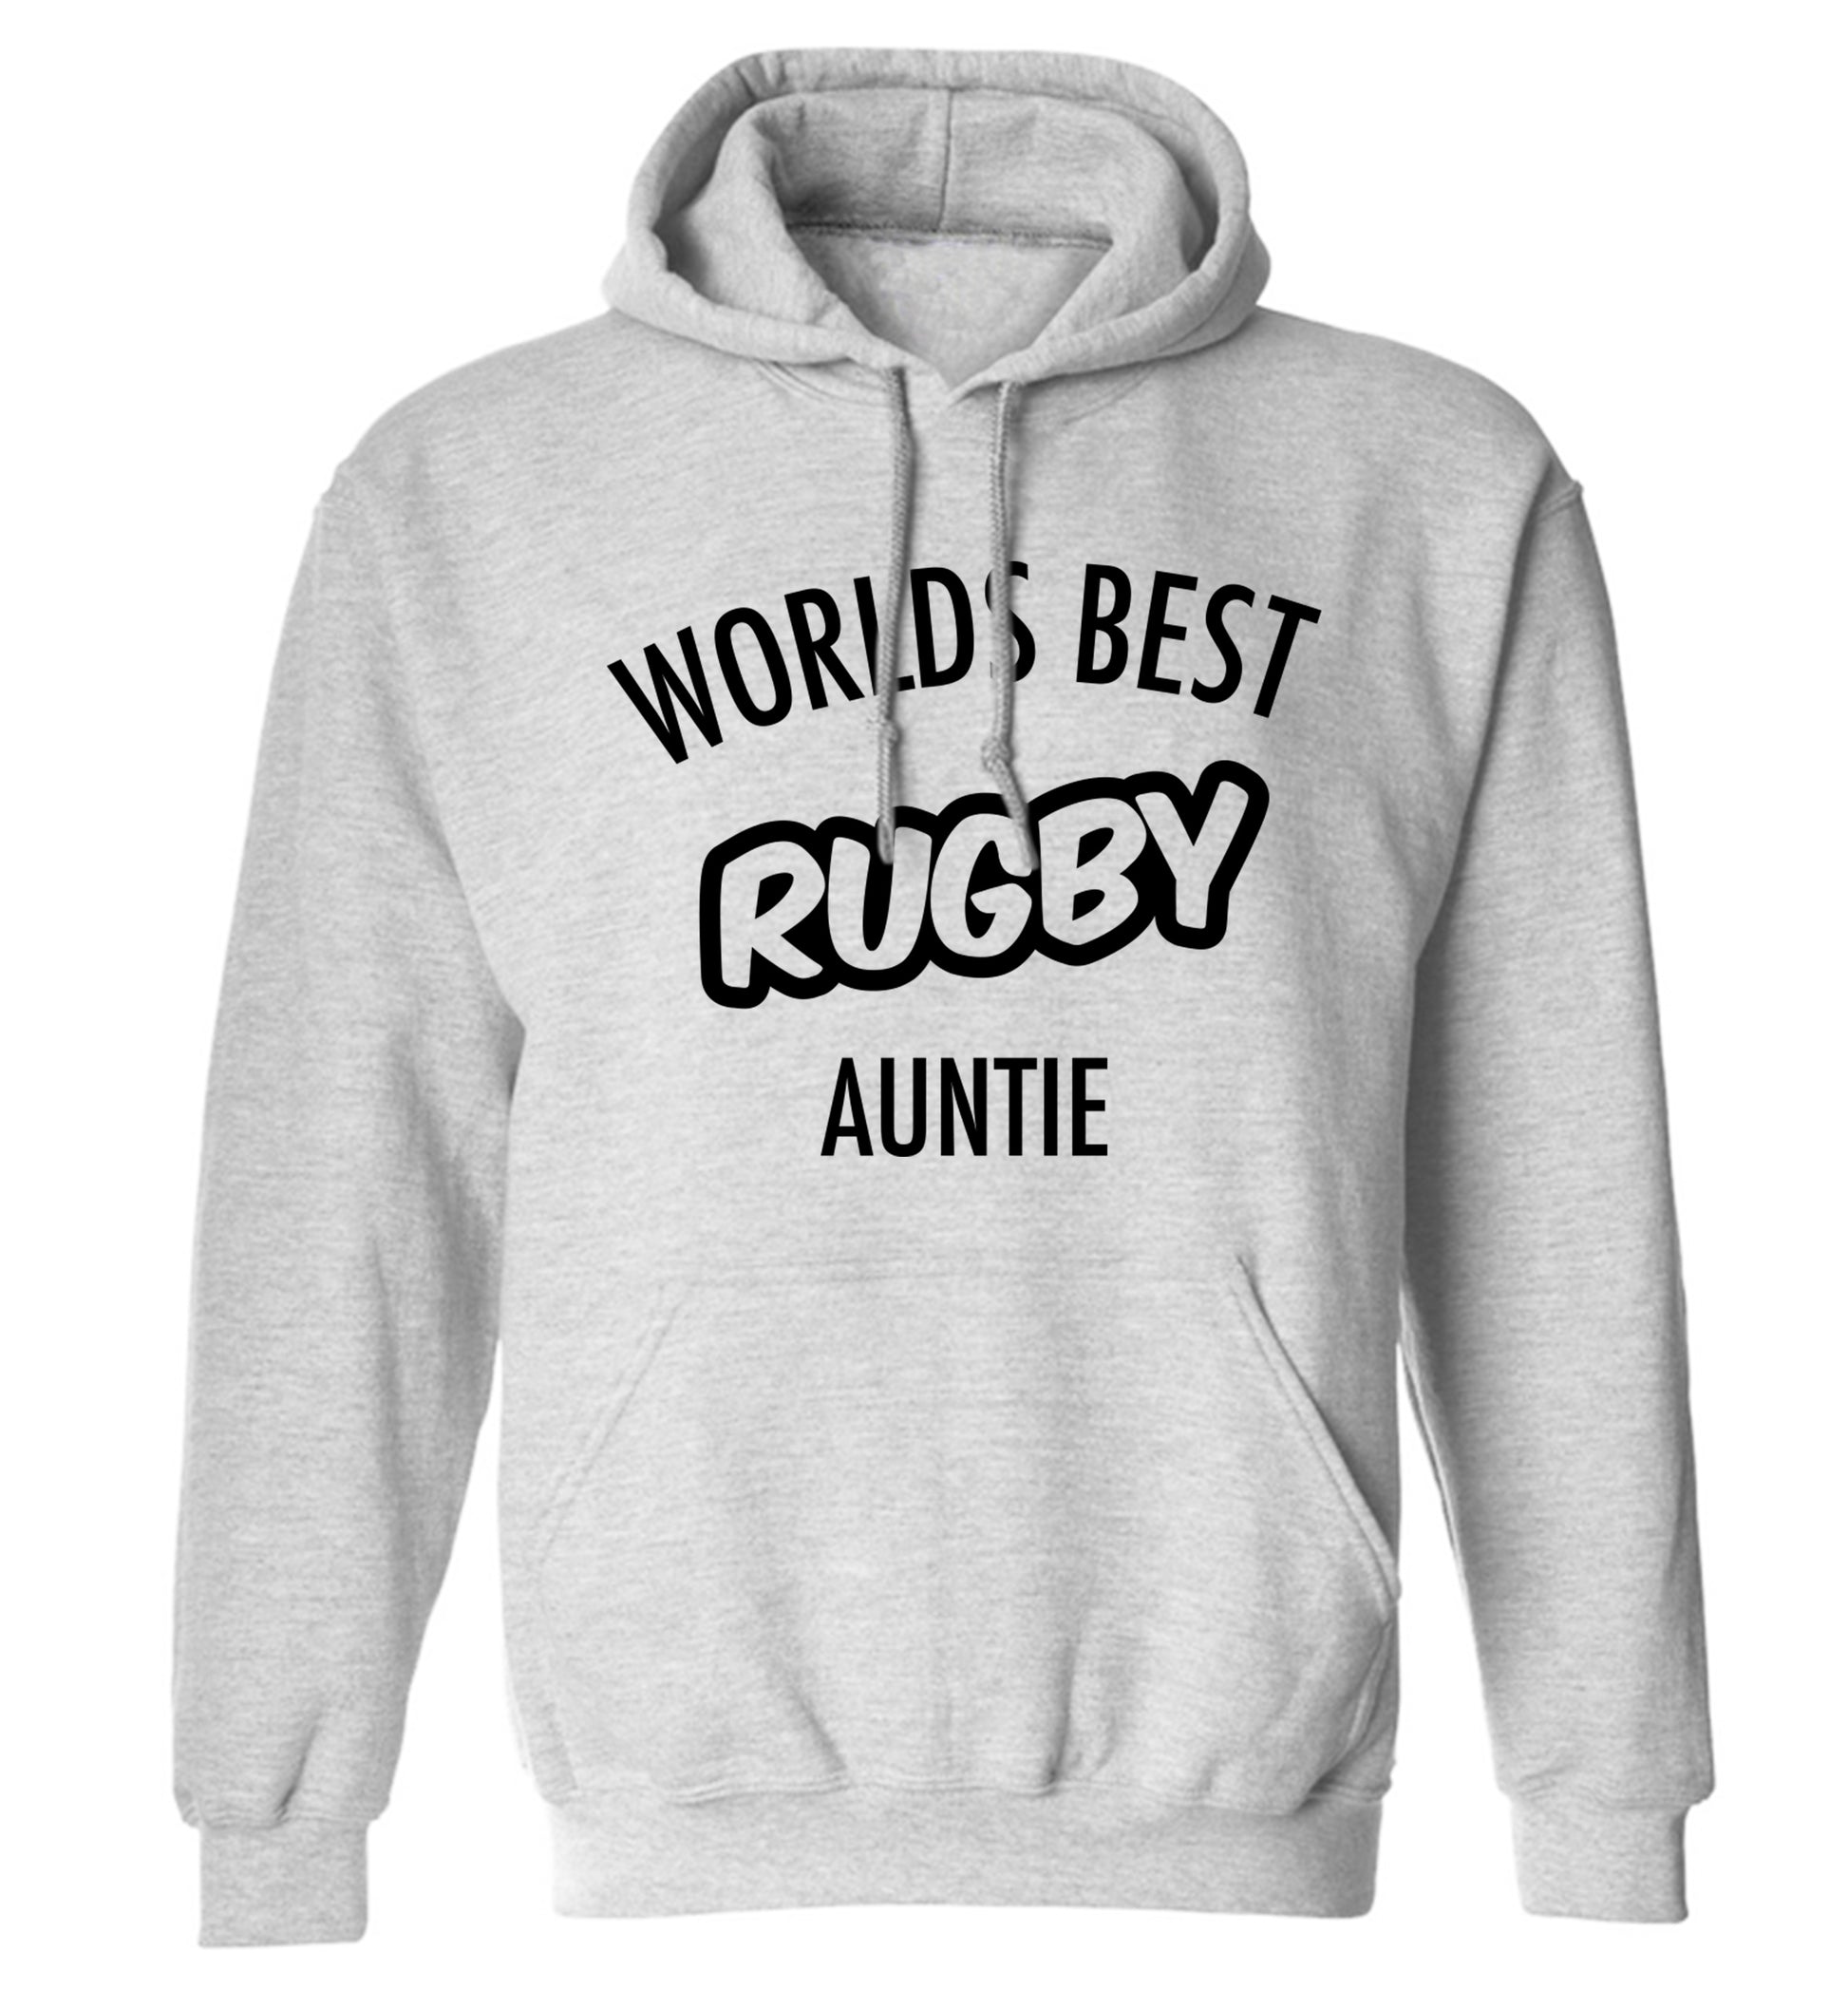 Worlds best rugby auntie adults unisex grey hoodie 2XL